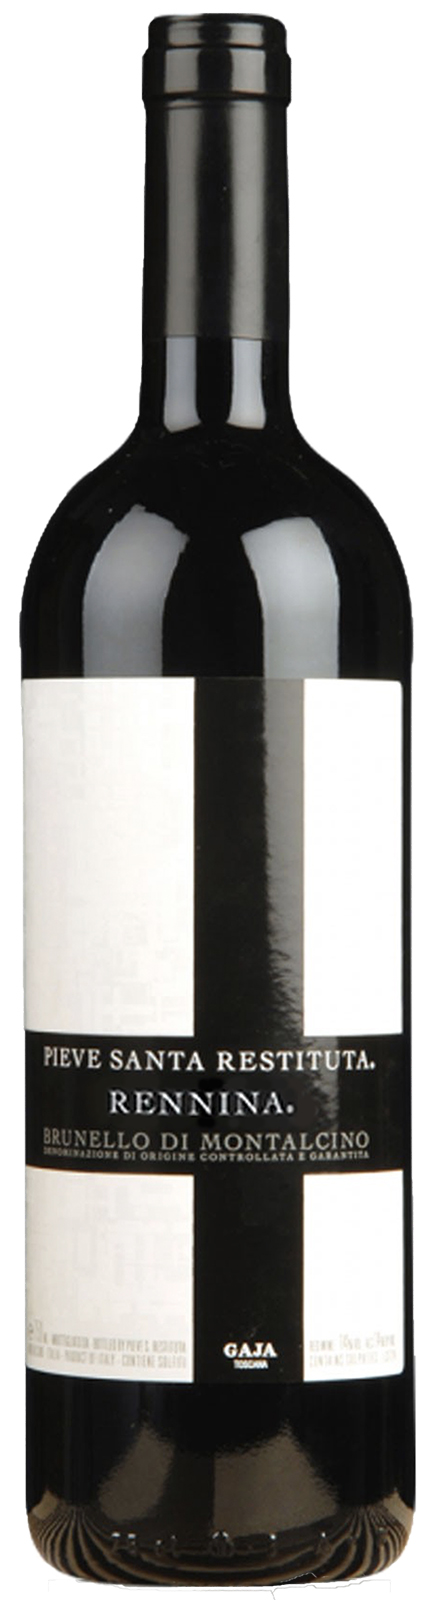 Bottle shot of 2013 Brunello di Montalcino Rennina